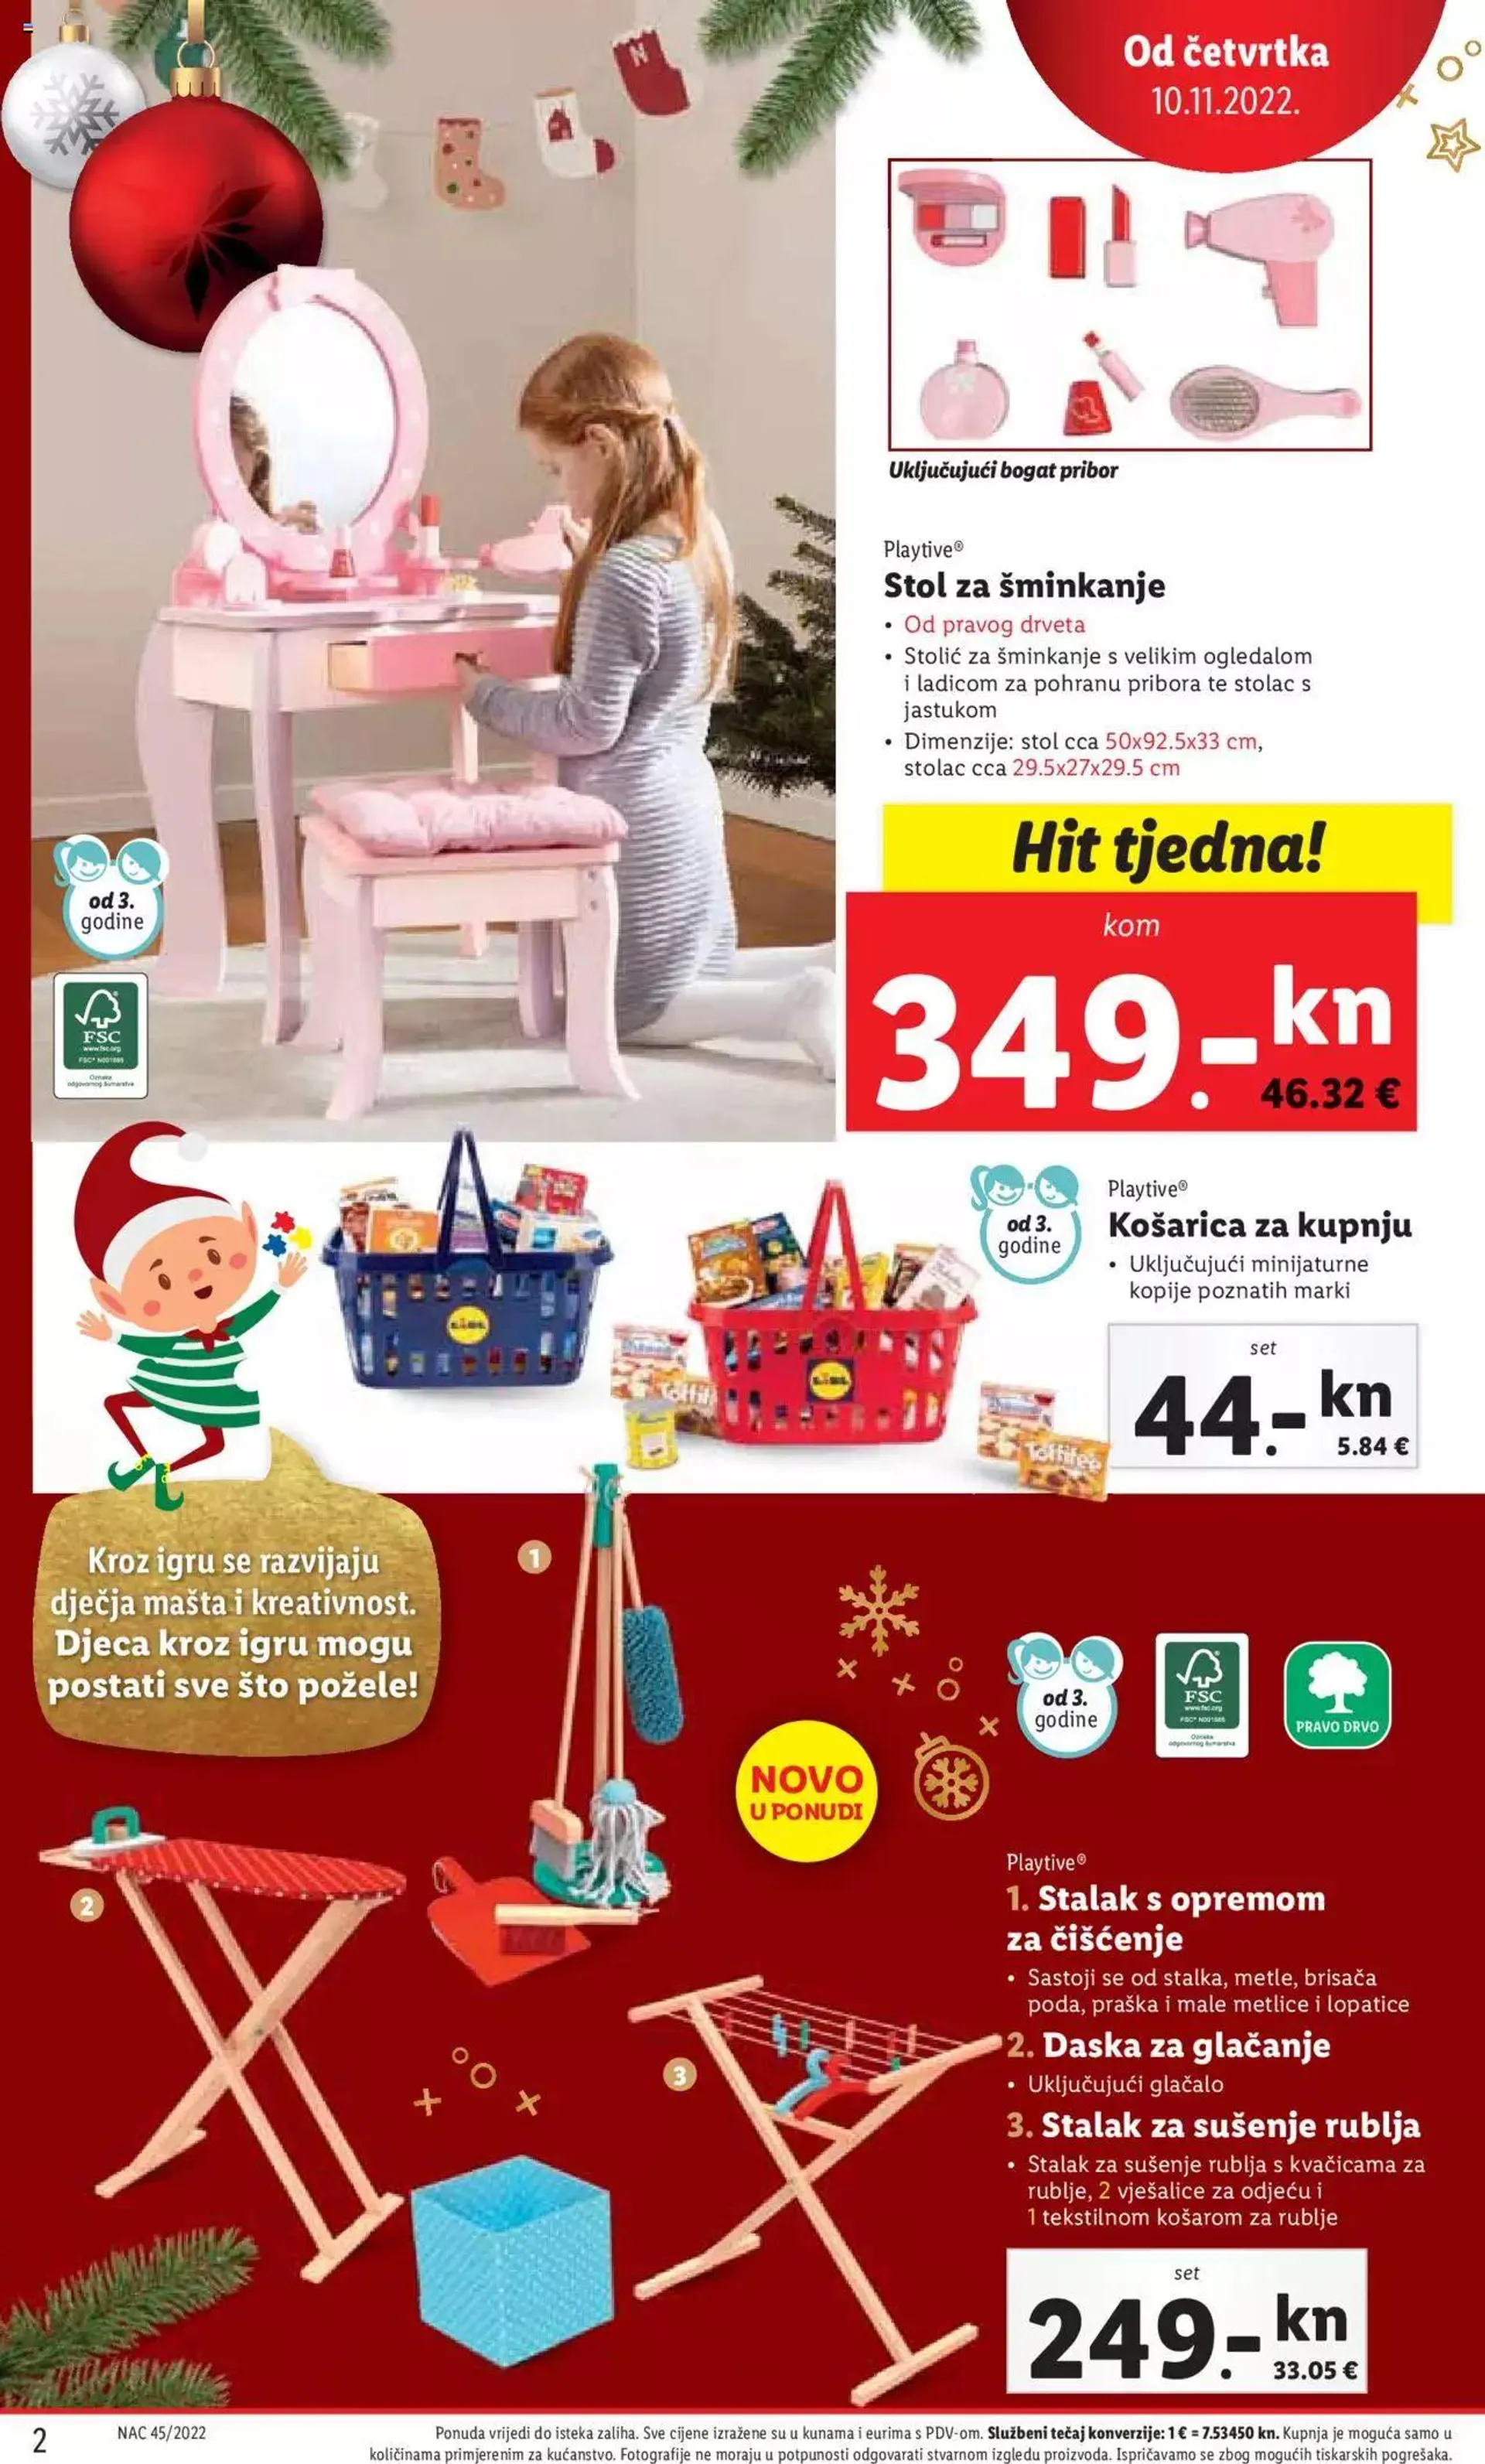 Lidl - Božićni katalog igračaka - 1